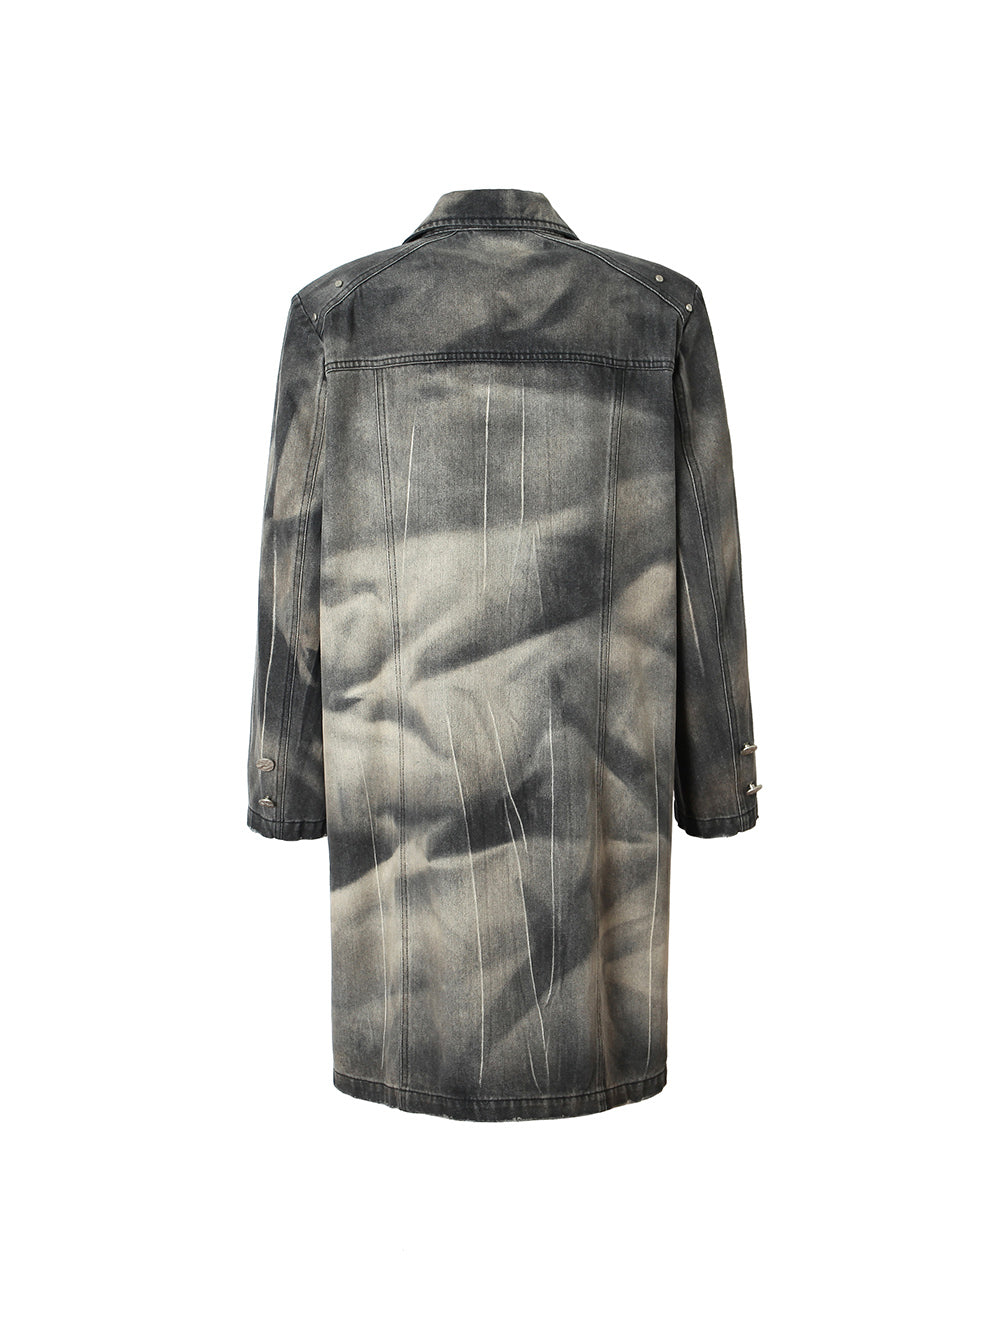 MUKTANK ⅩWESAME Fashion Ink Sense Retro Washed Old Suit Denim Long Coat